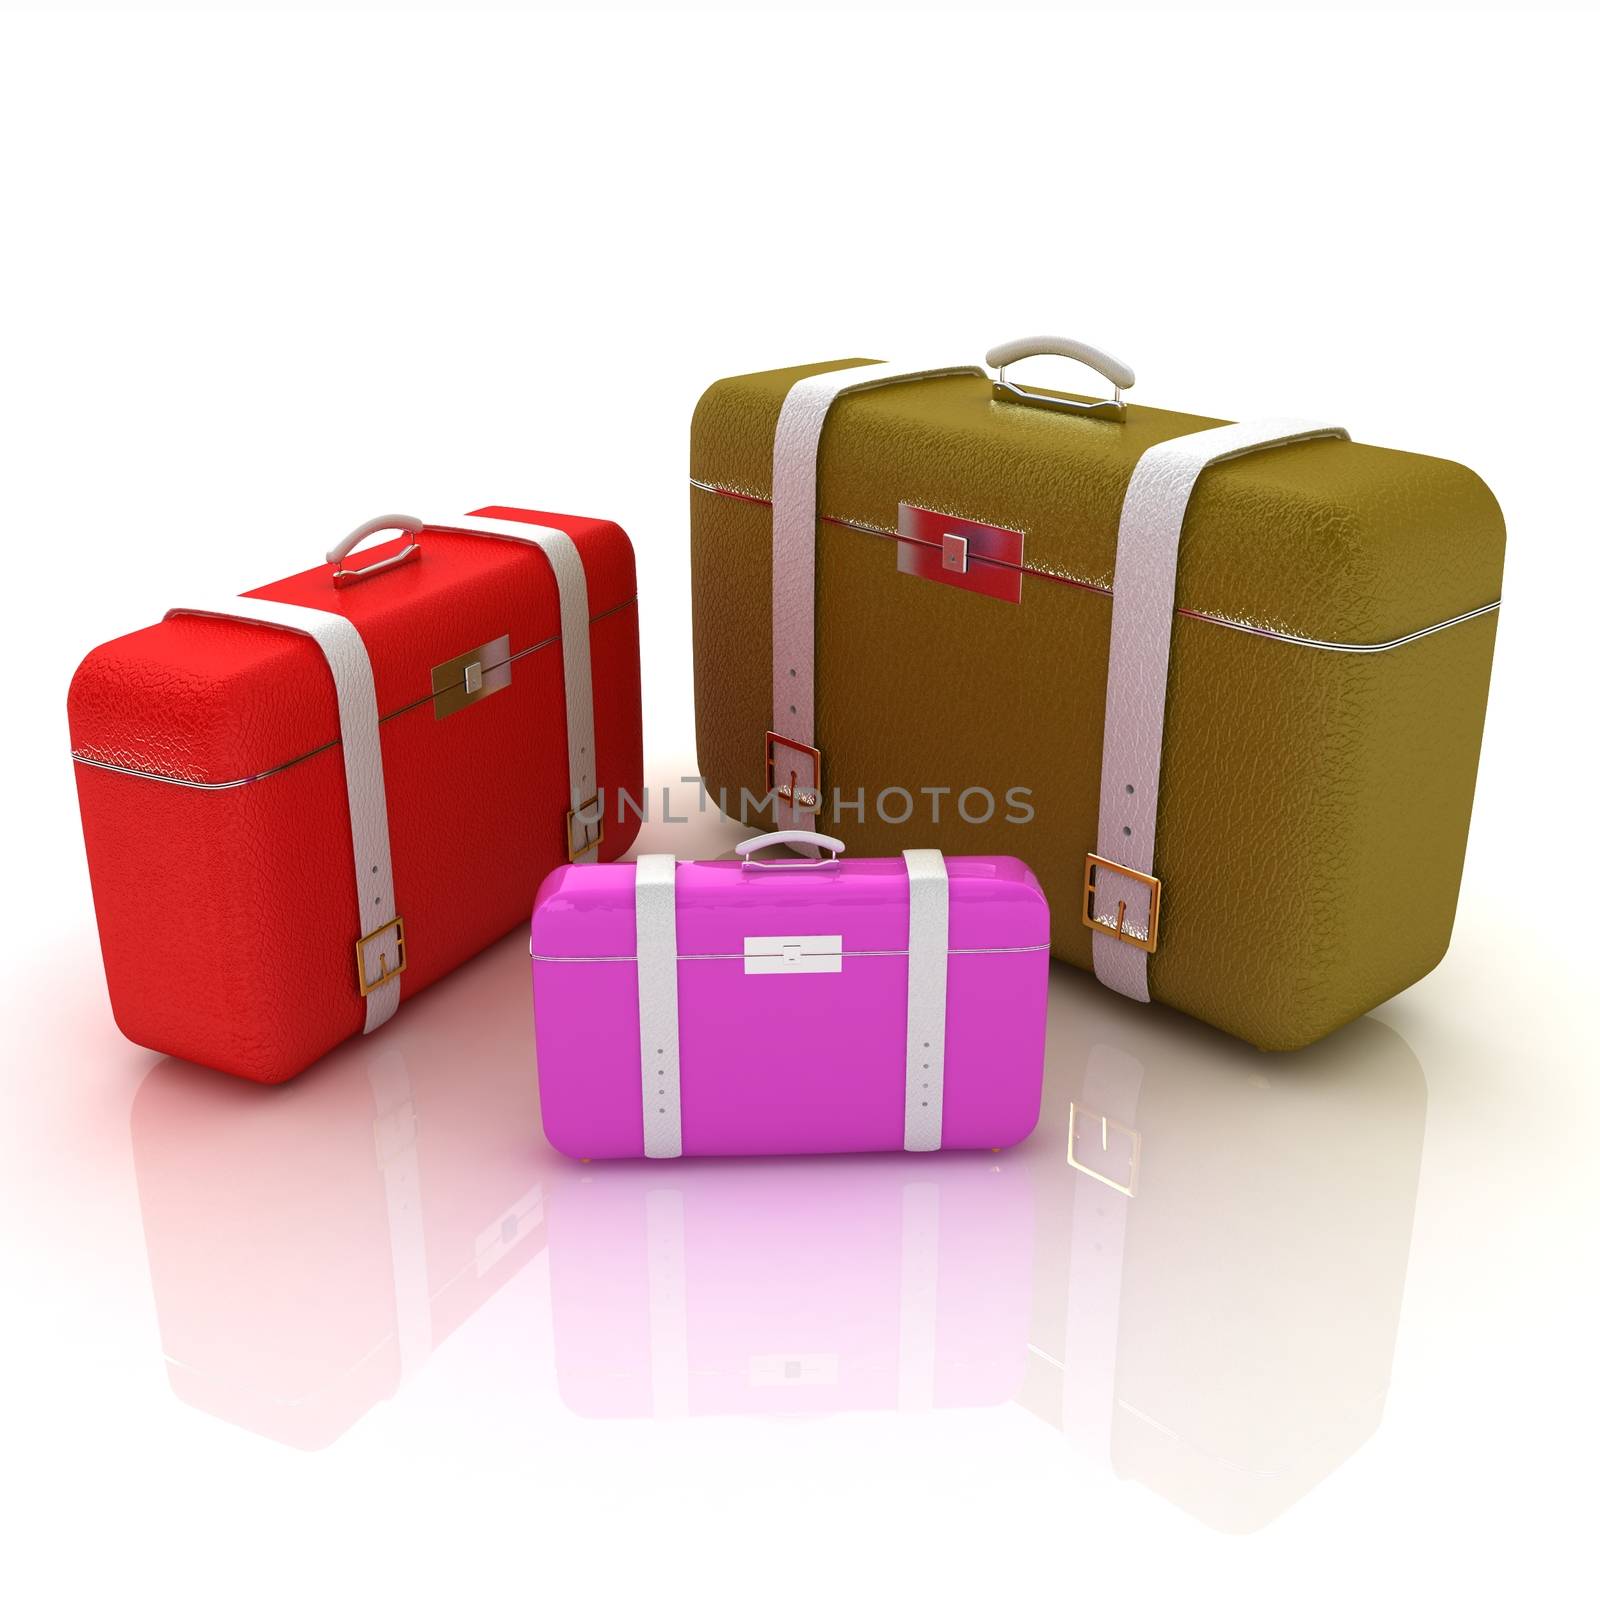 Traveler's suitcases by Guru3D